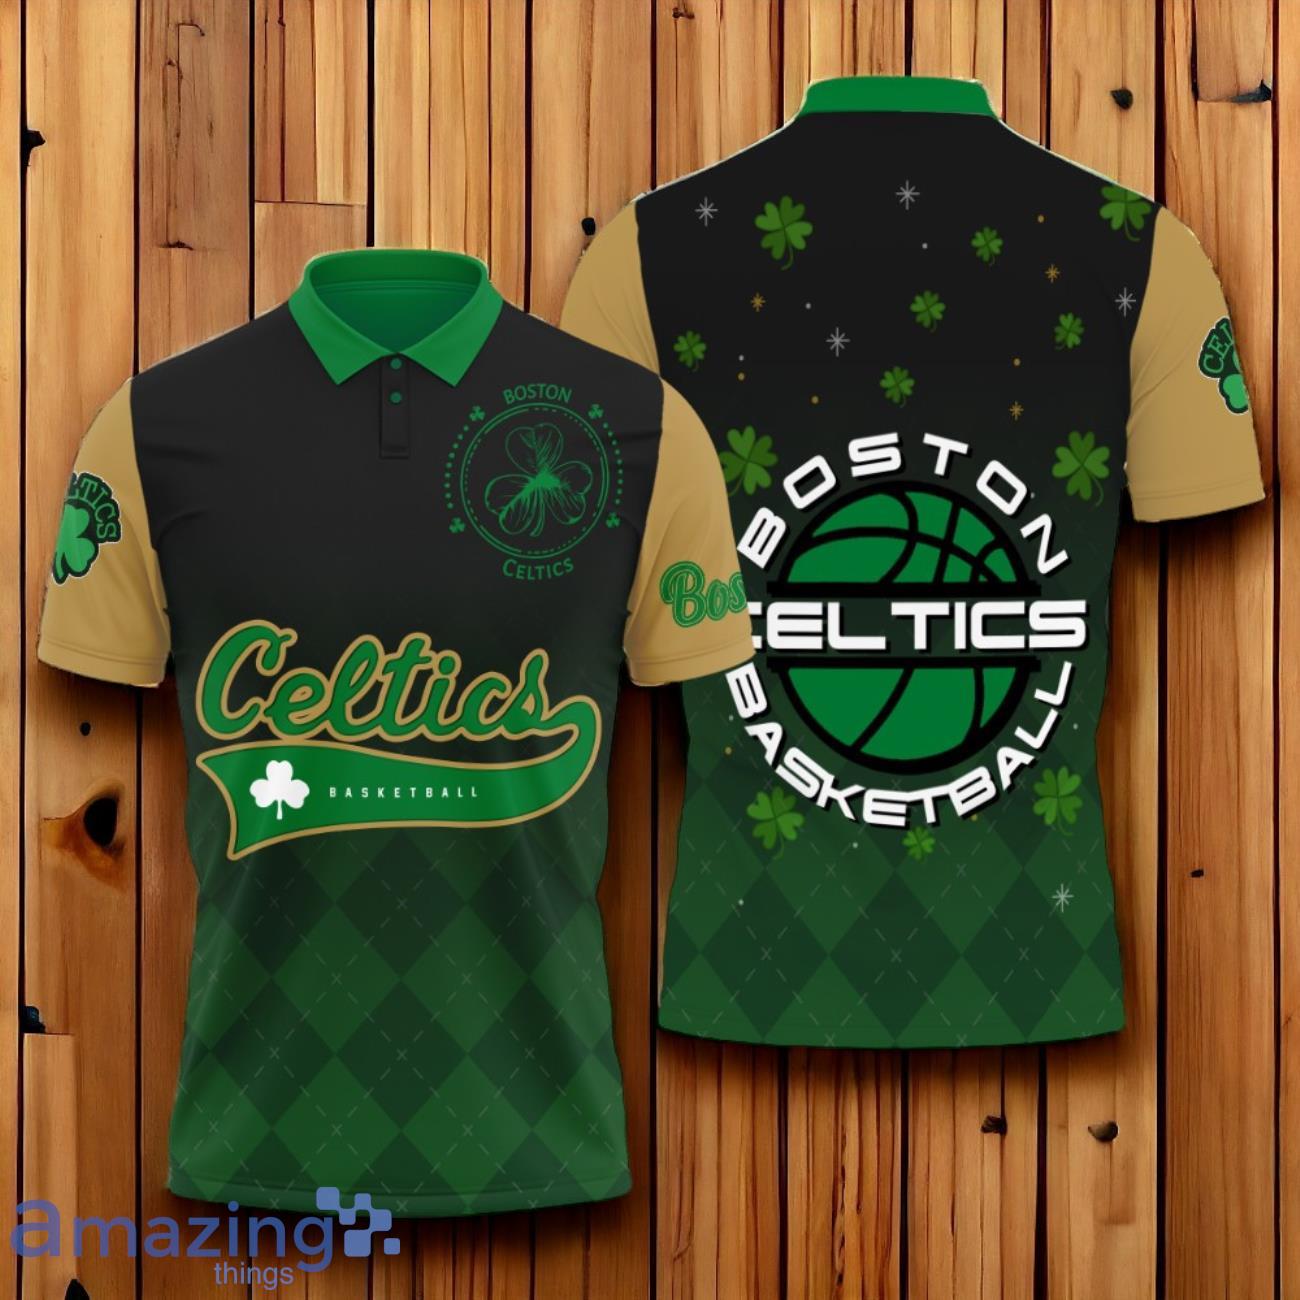 Boston Celtics Basketball Patrick's Day Art Design New Polo Shirt Product Photo 1